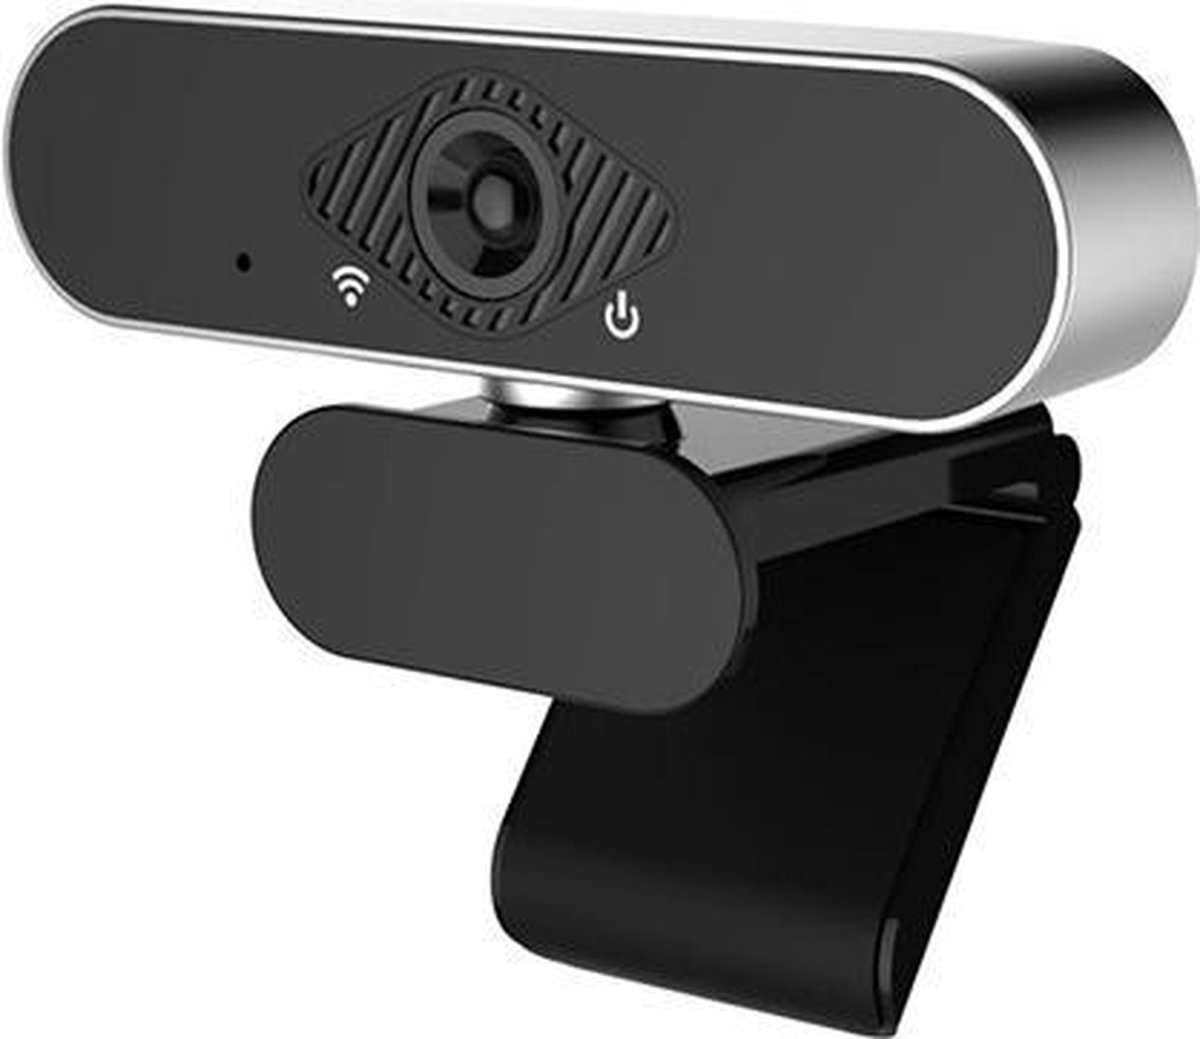 Spire Webcam 1080P Full HD kwaliteit - Microfoon - Zwart - USB aansluiting - Plug & Play - Auto Focus Lens - Verstelbaar - Voor Windows, Mac en Android - 2.1 Megapixel